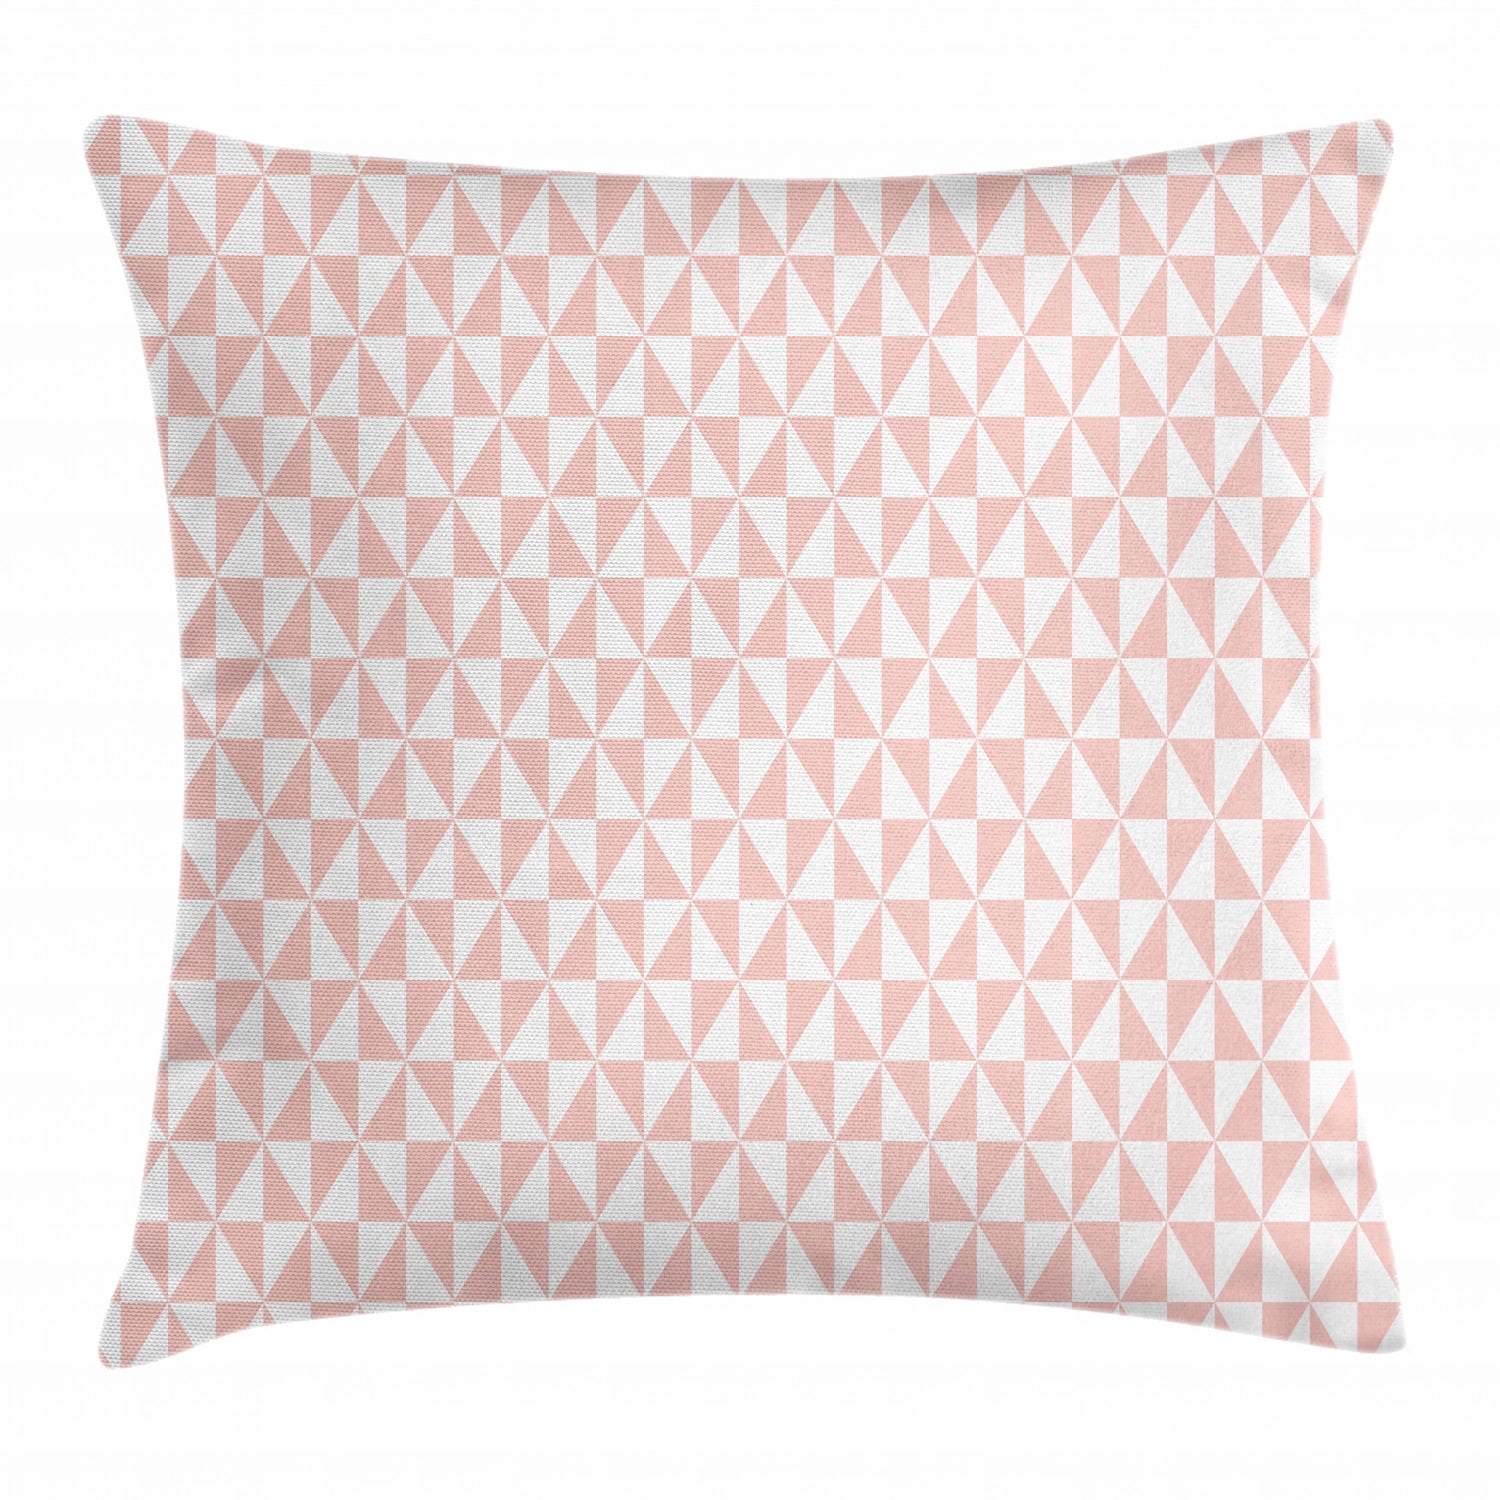 Winhome Decorative Decors Blush Peachy, Light Pink Pillow Cases